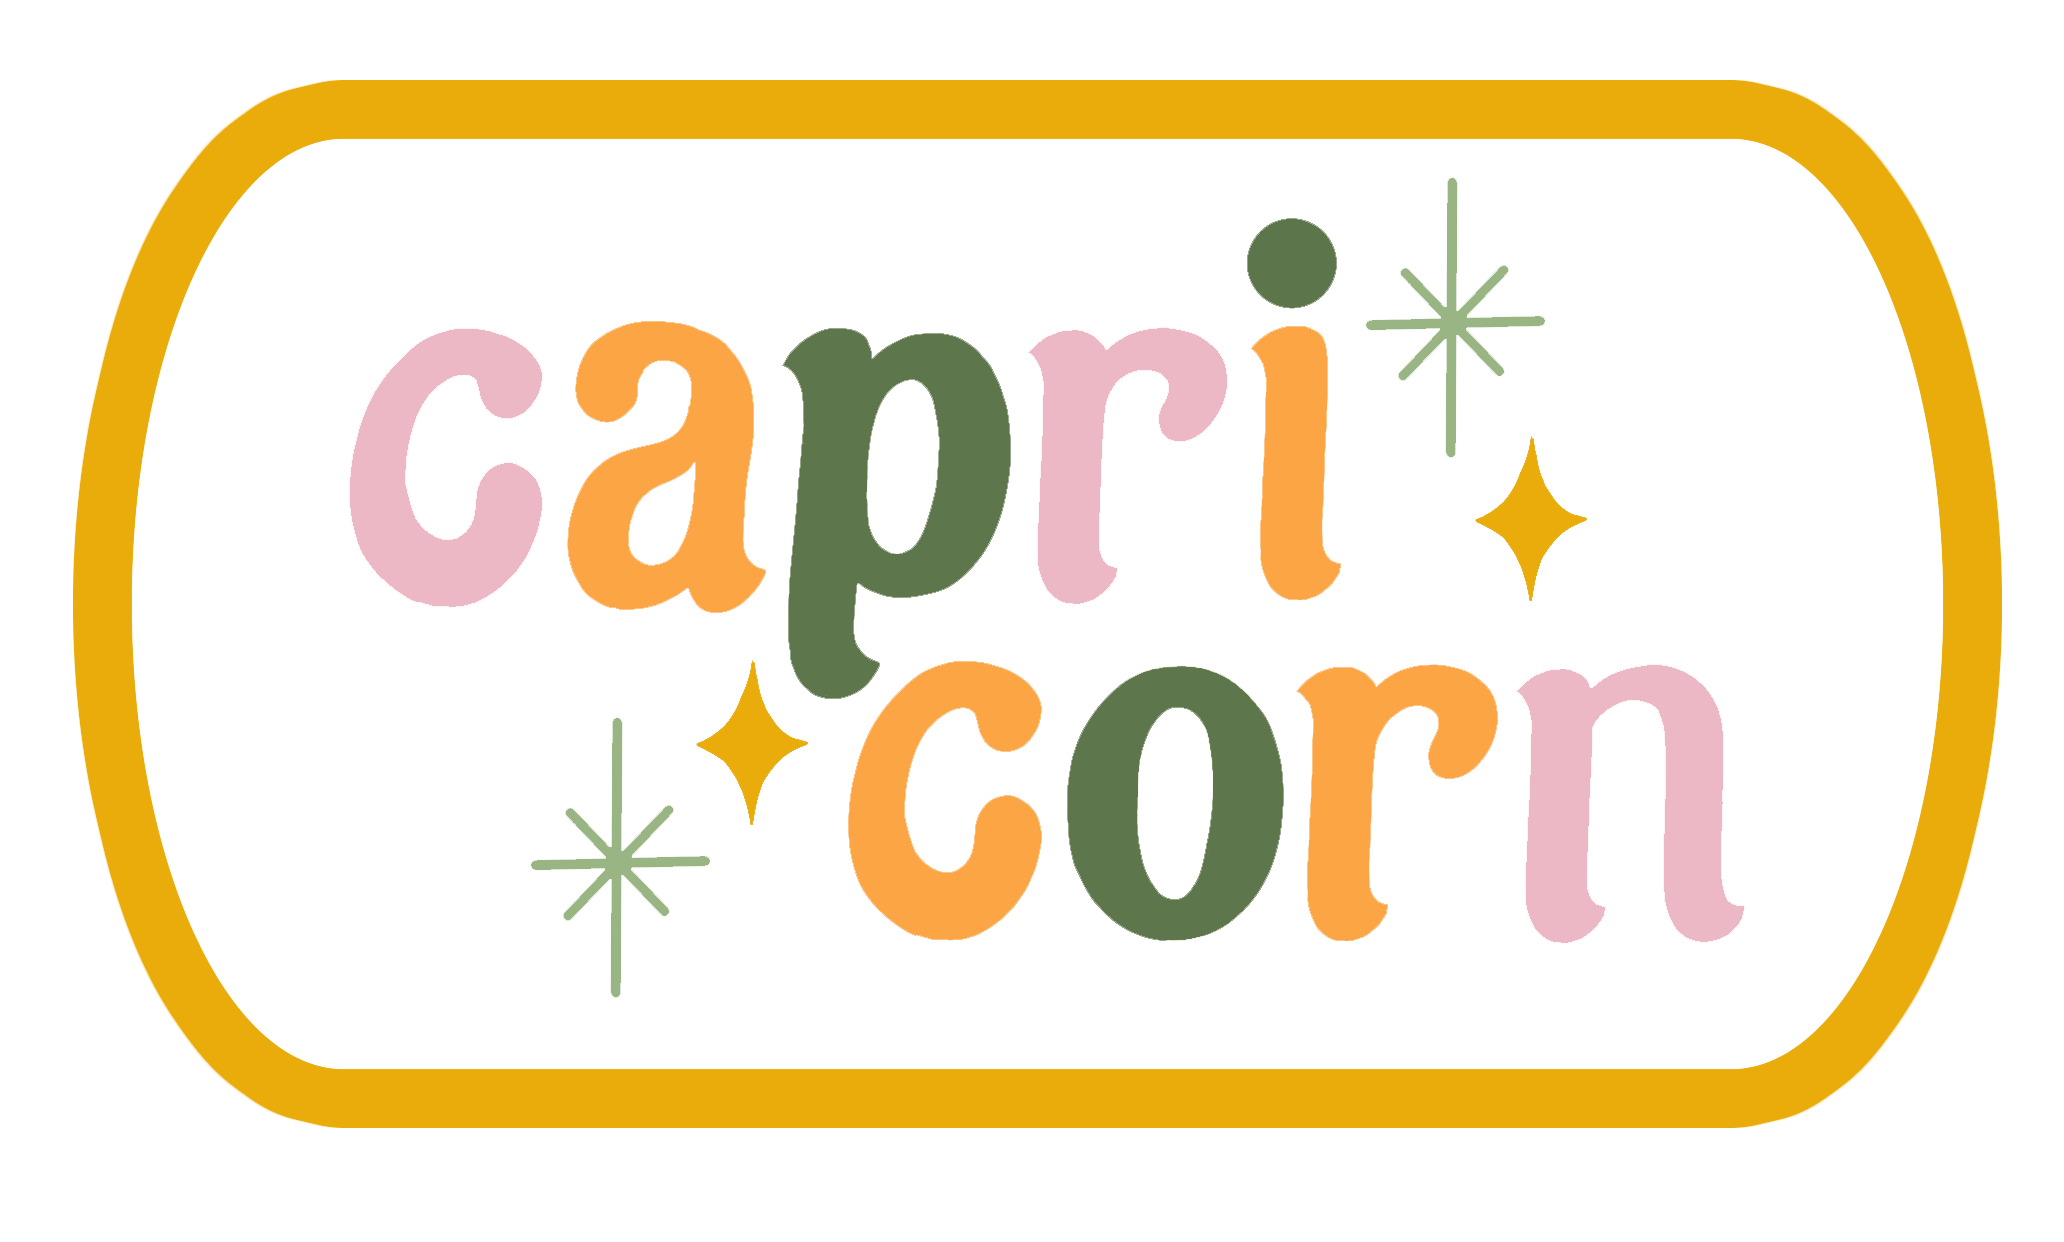 CAPRICORN.png